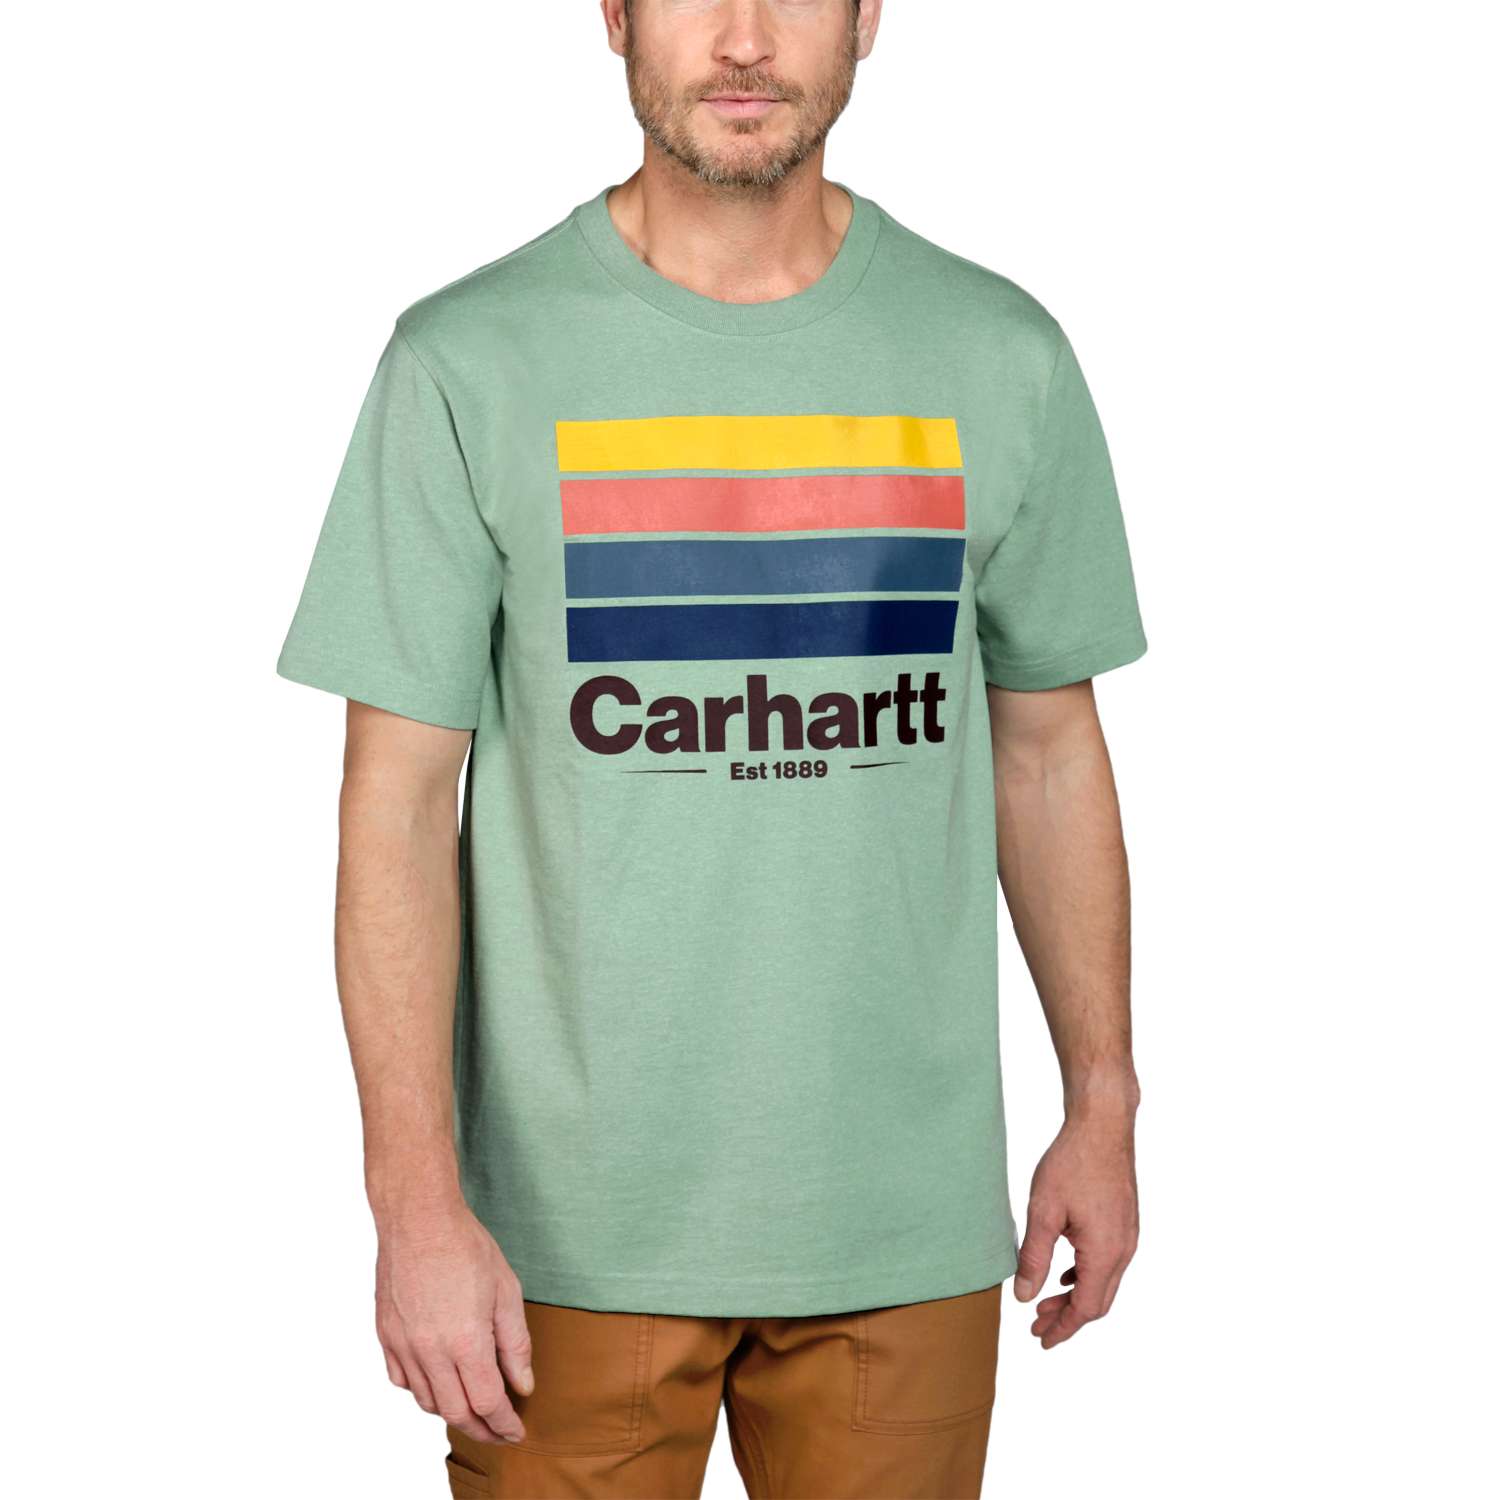 carhartt® Herren-T-Shirt »LINE GRAPHIC S/S T-SHIRT« - Gr. S, jade heather - erhältlich bei ♡ HUG Technik ✓